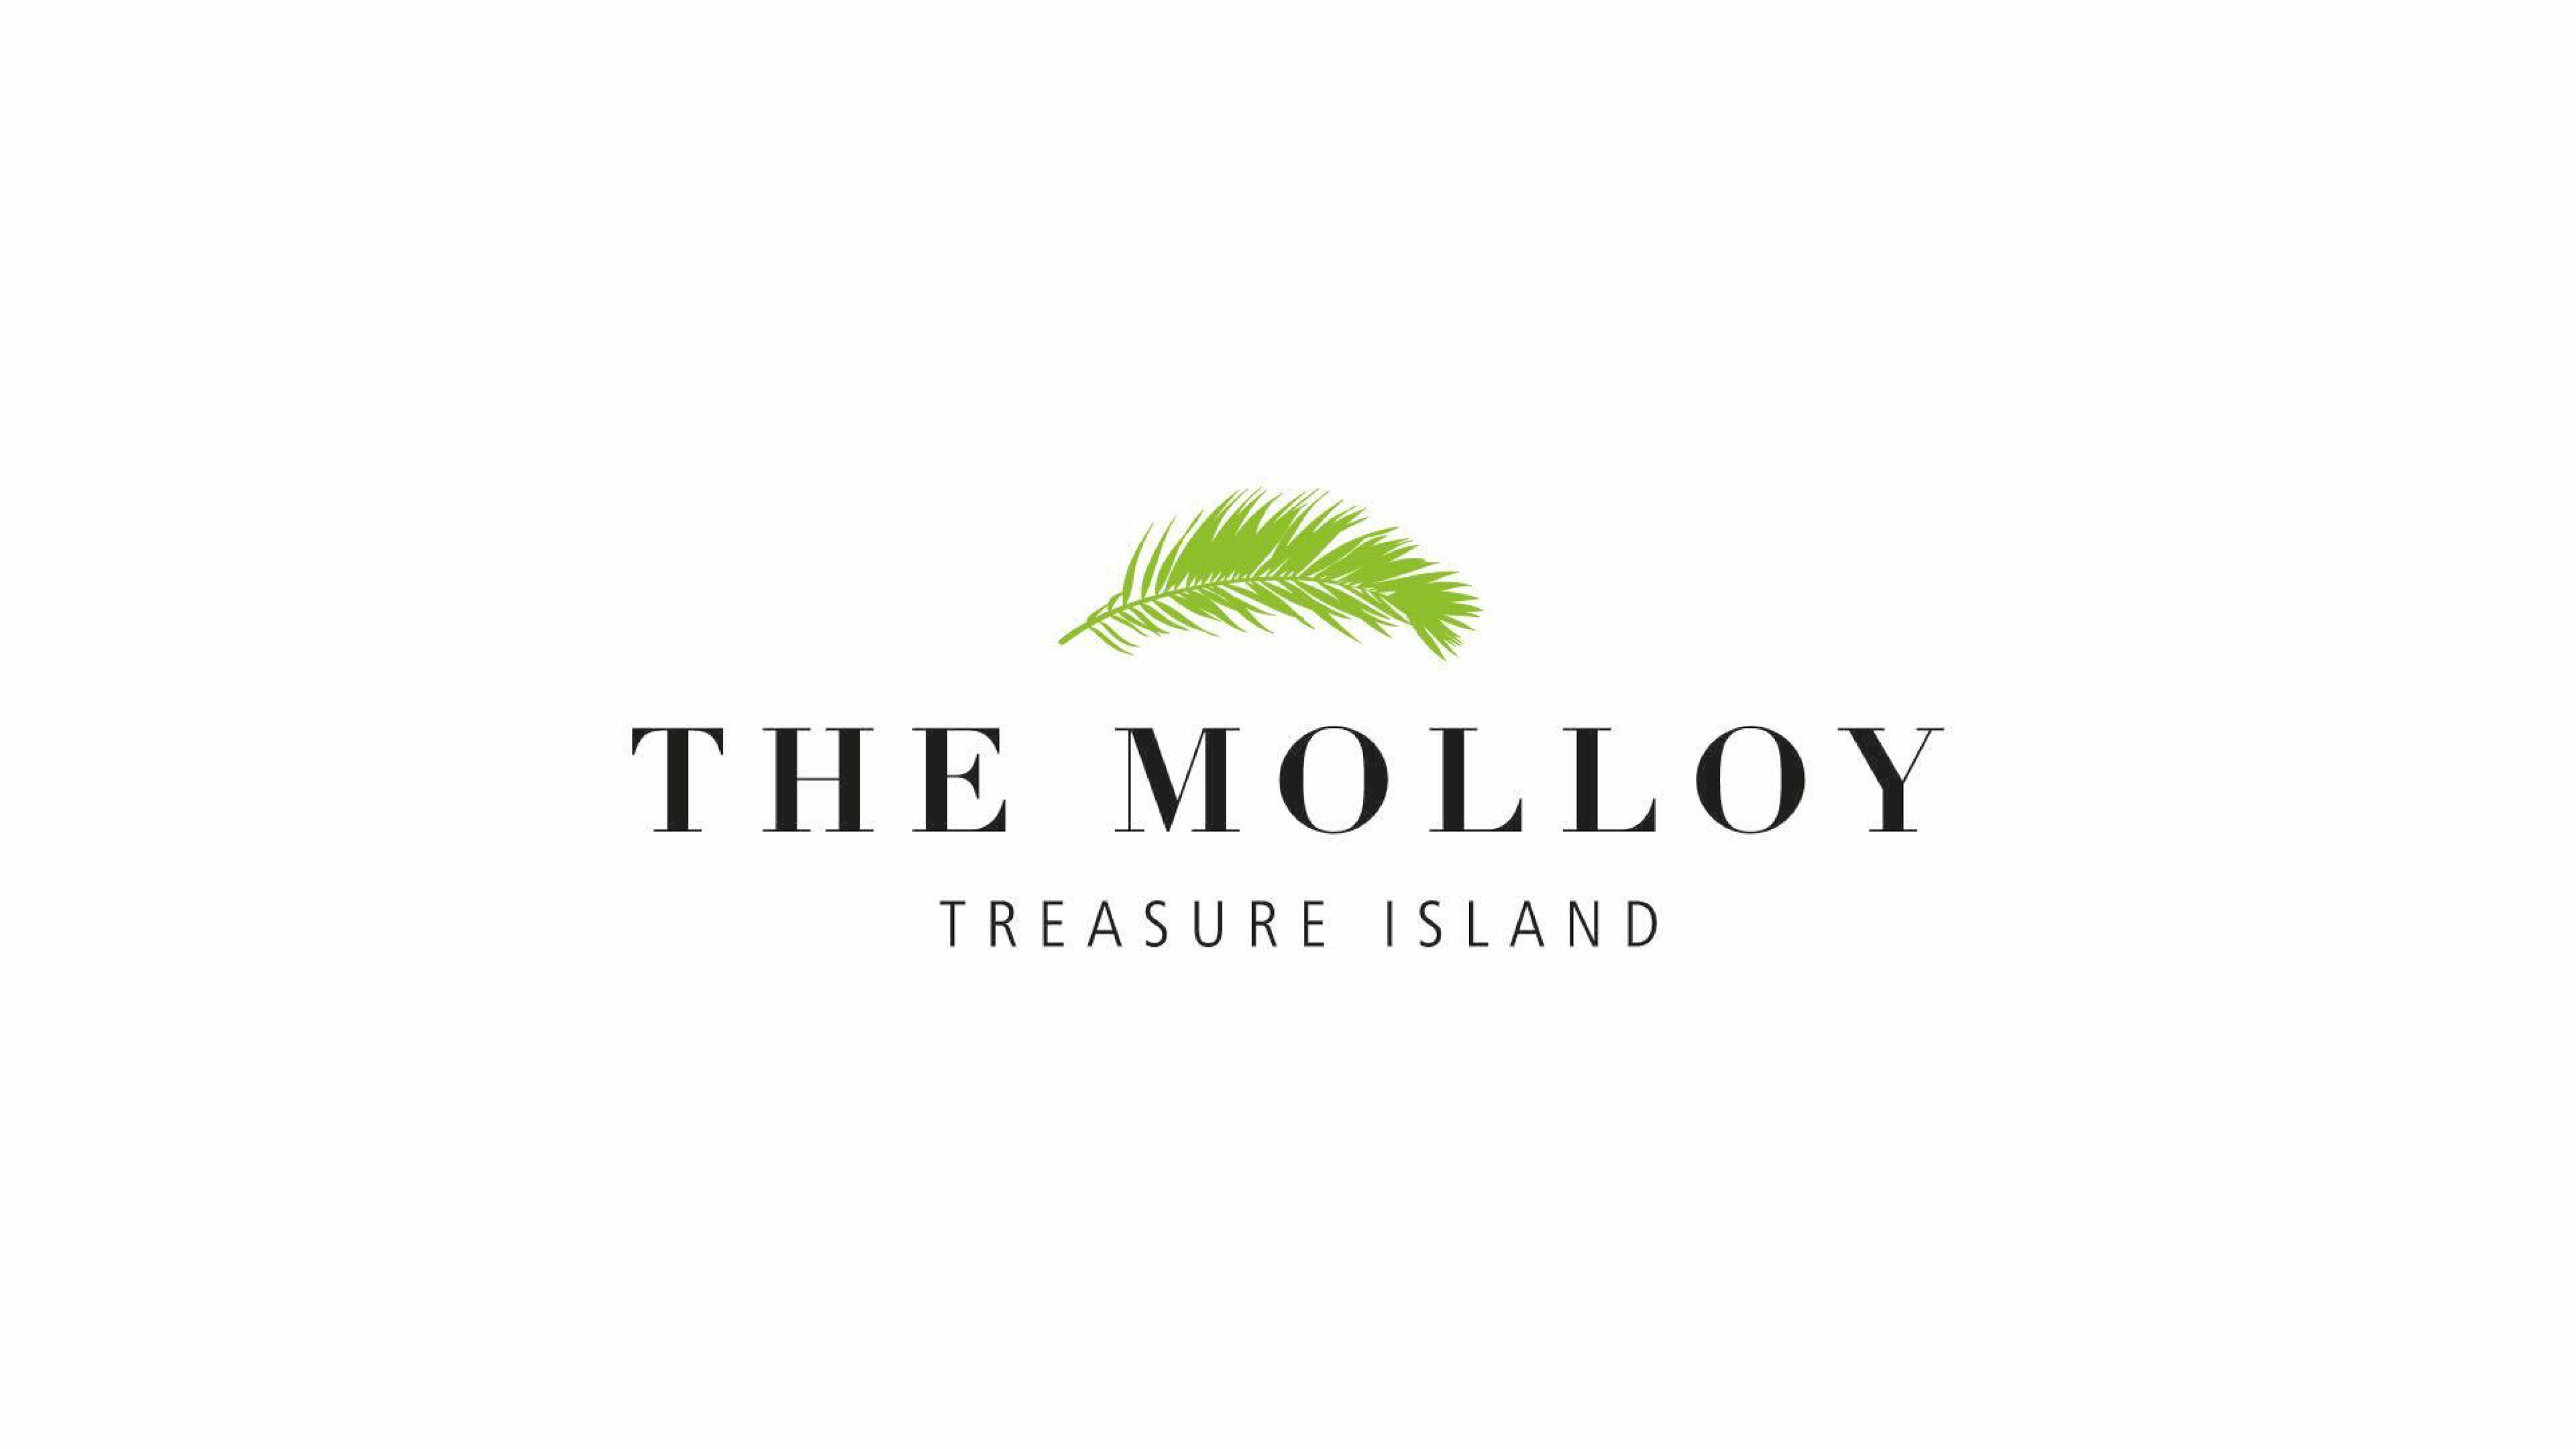 The Molloy